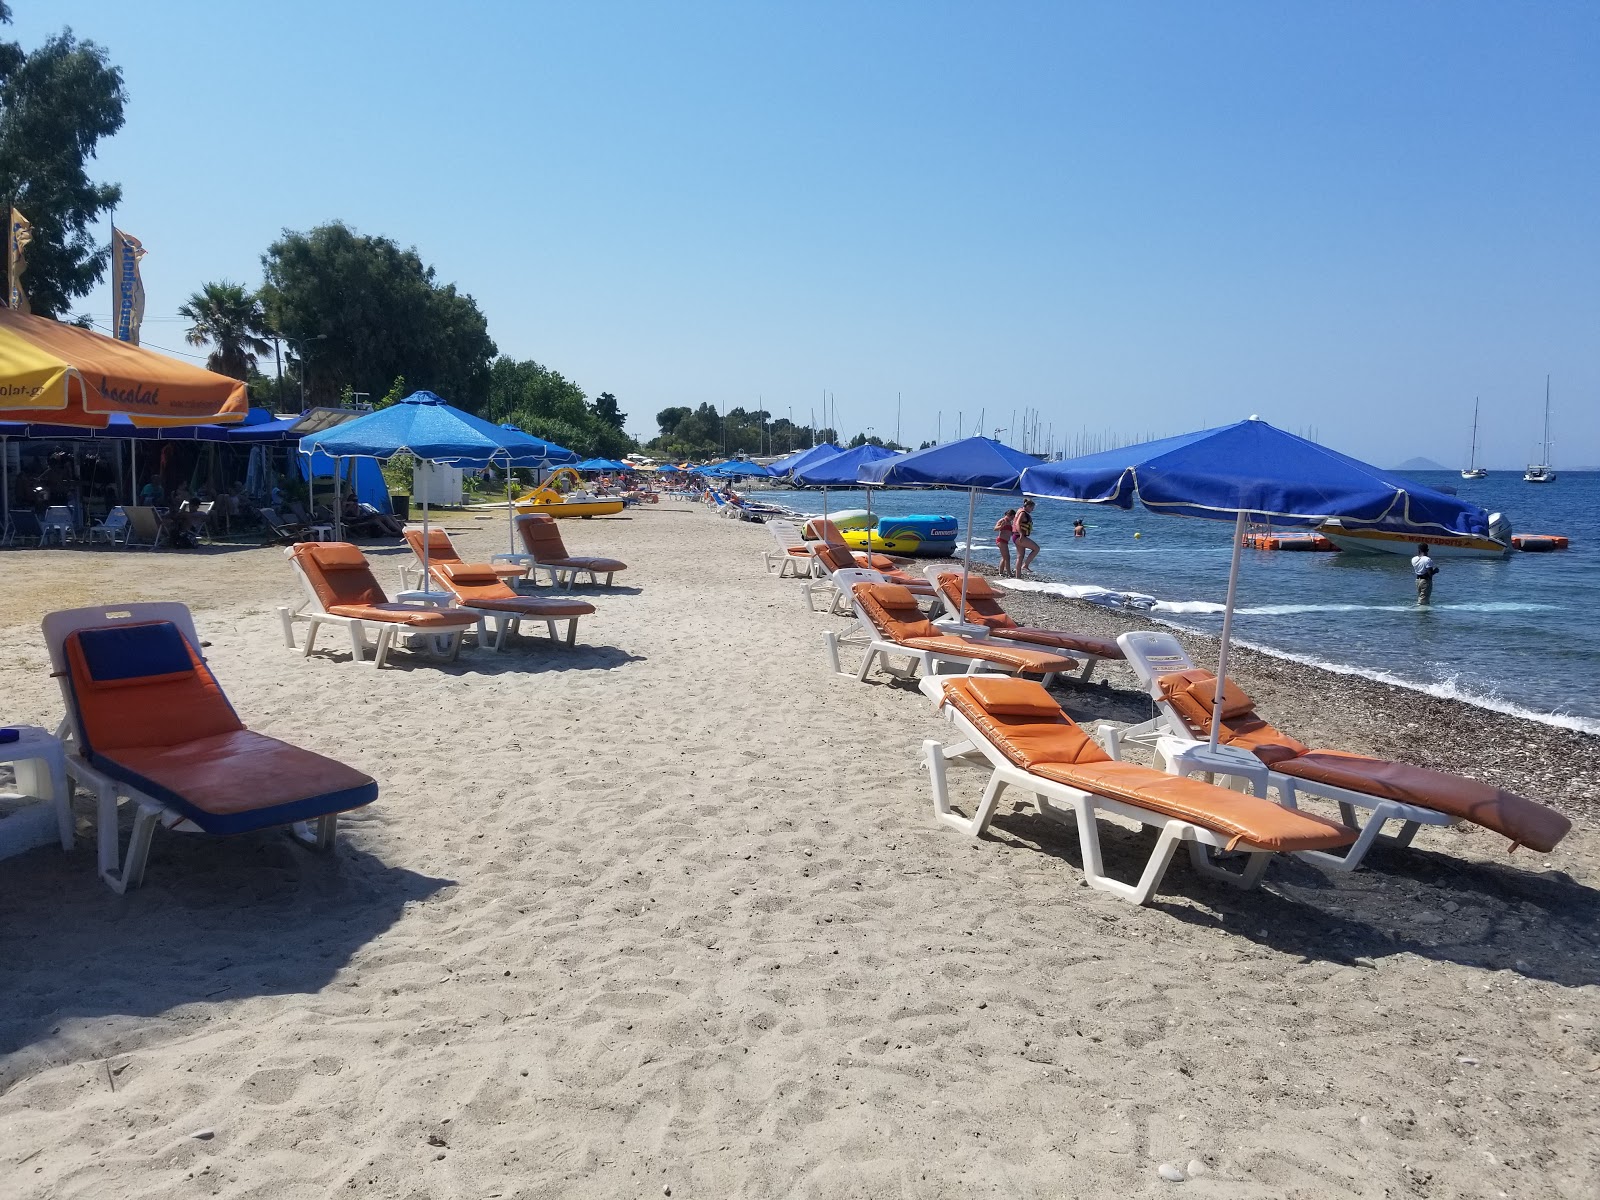 Foto de Paradiso Beach - lugar popular entre os apreciadores de relaxamento